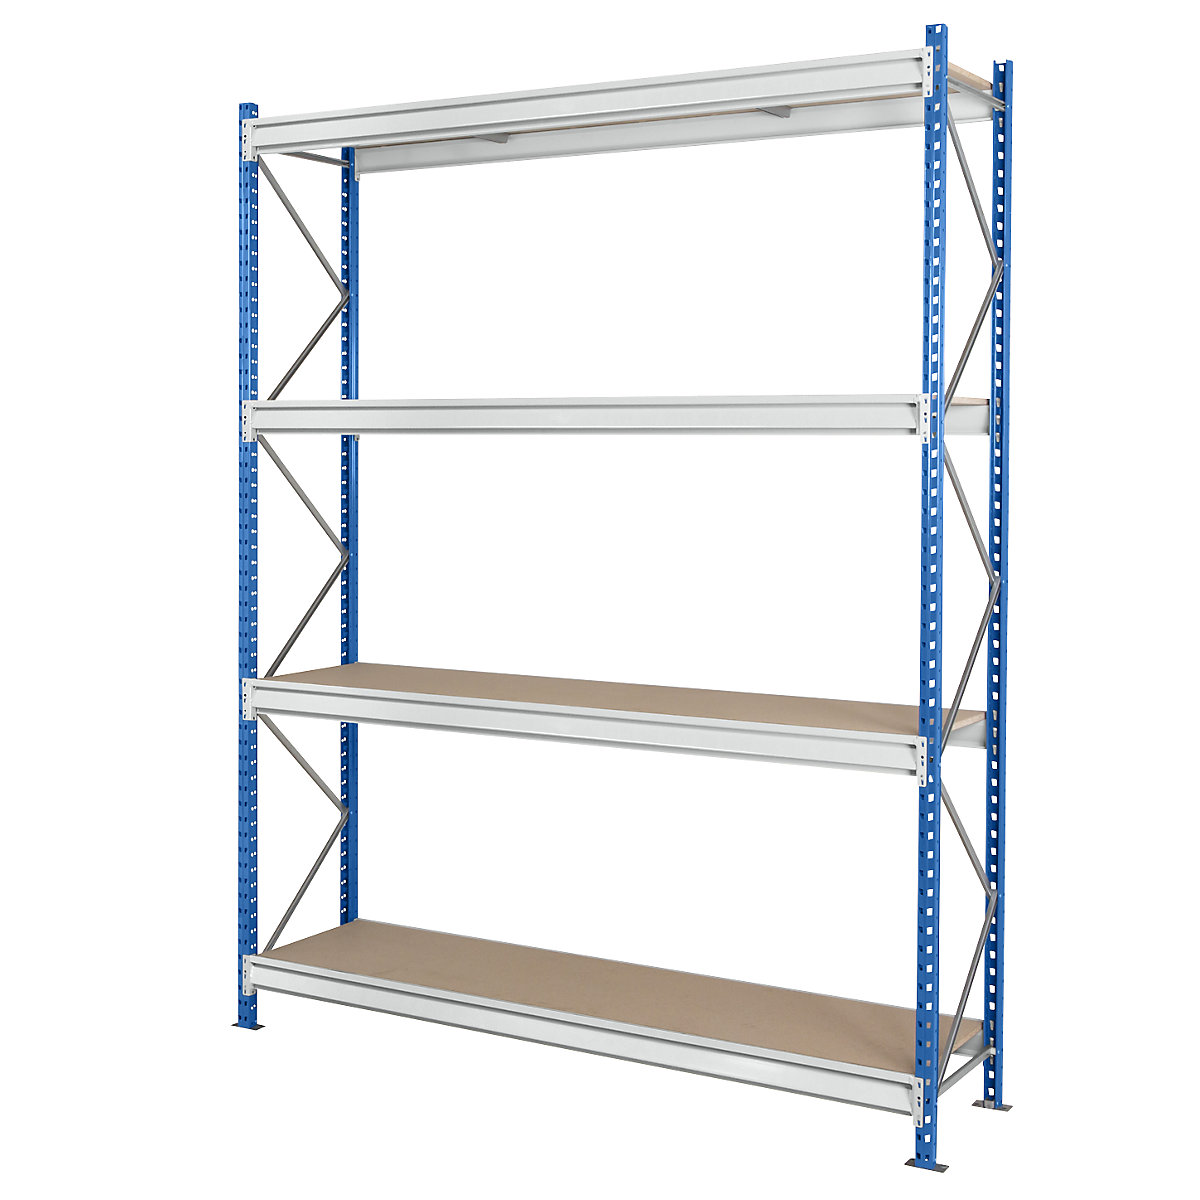 Heavy duty wide span shelving with moulded chipboard shelf panels, frame colour blue, HxWxD 2996 x 2410 x 1000 mm, standard shelf unit-8